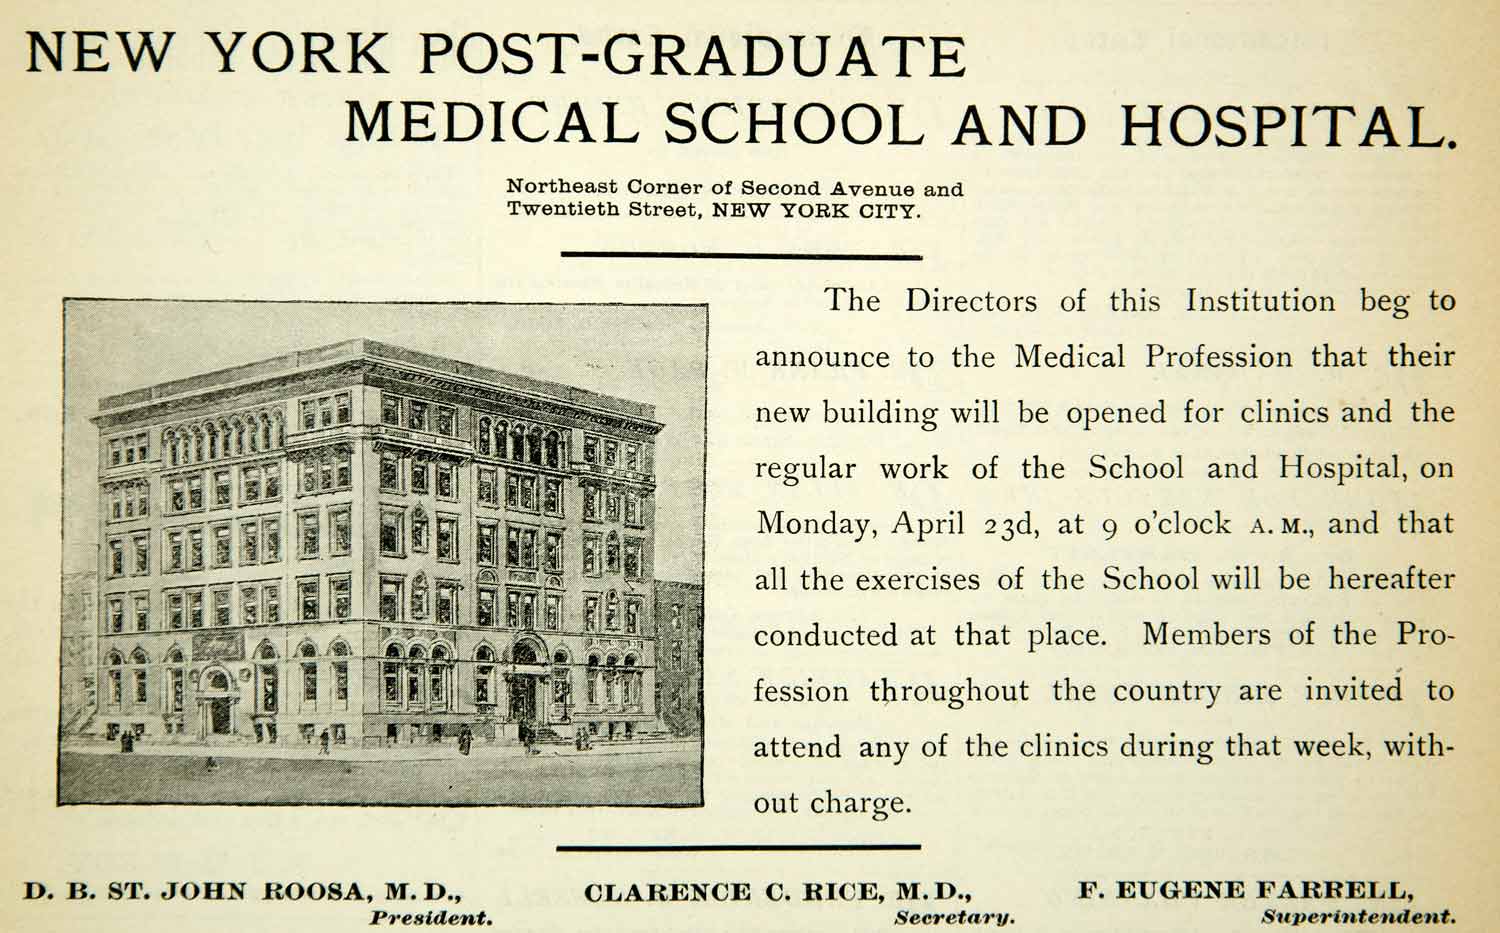 1894 Ad New York Post Graduate Medical School Hospital 2nd Ave 20th St YBM2